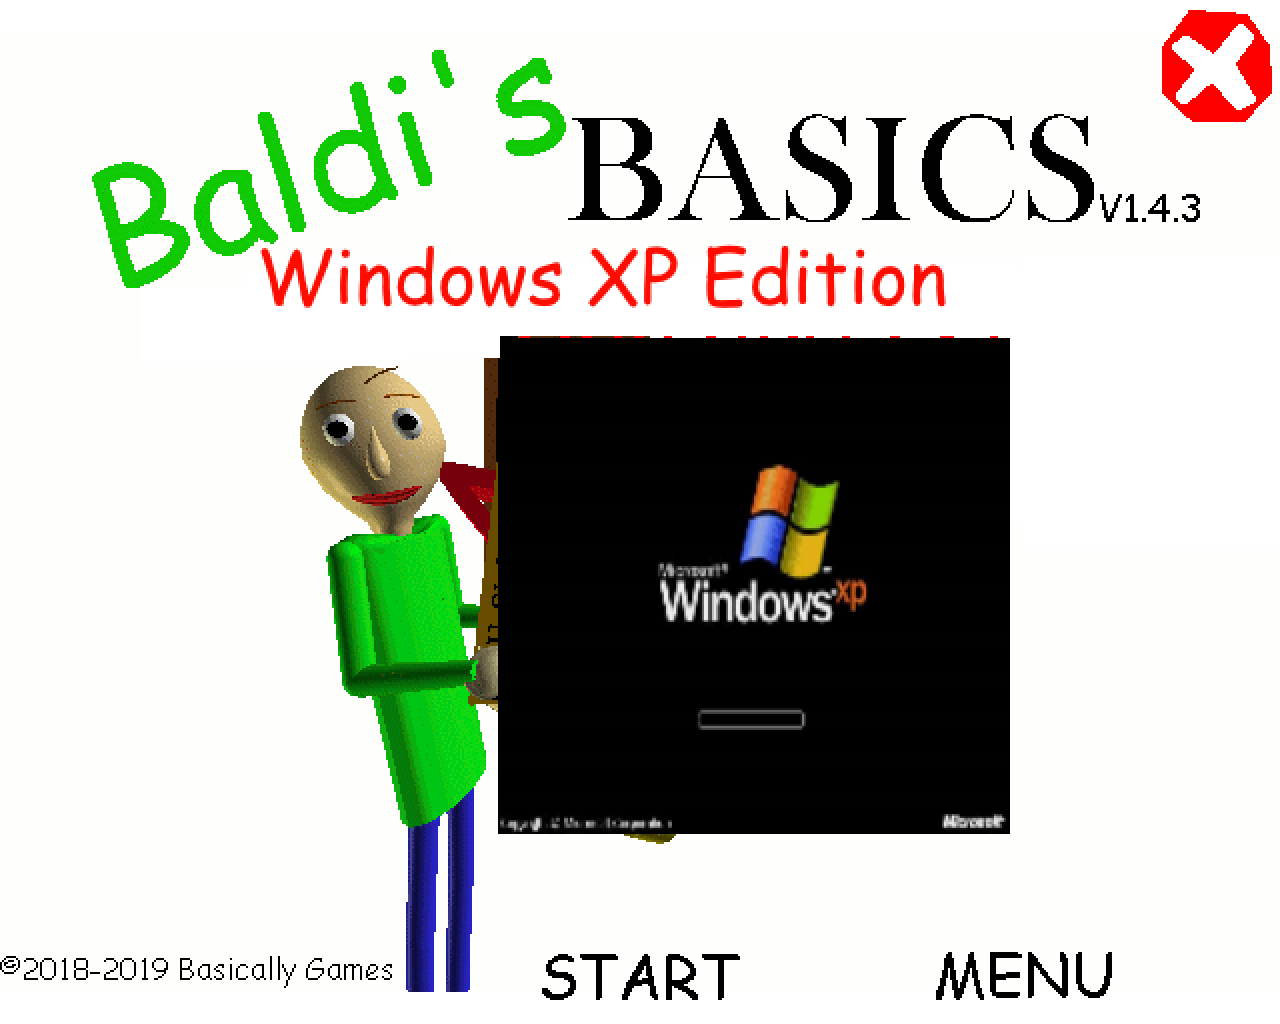 Baldis Basics Scratch Edition. Baldi Android. Baldis Basics Exclusive Edition. Basically games. Baldi soundboard